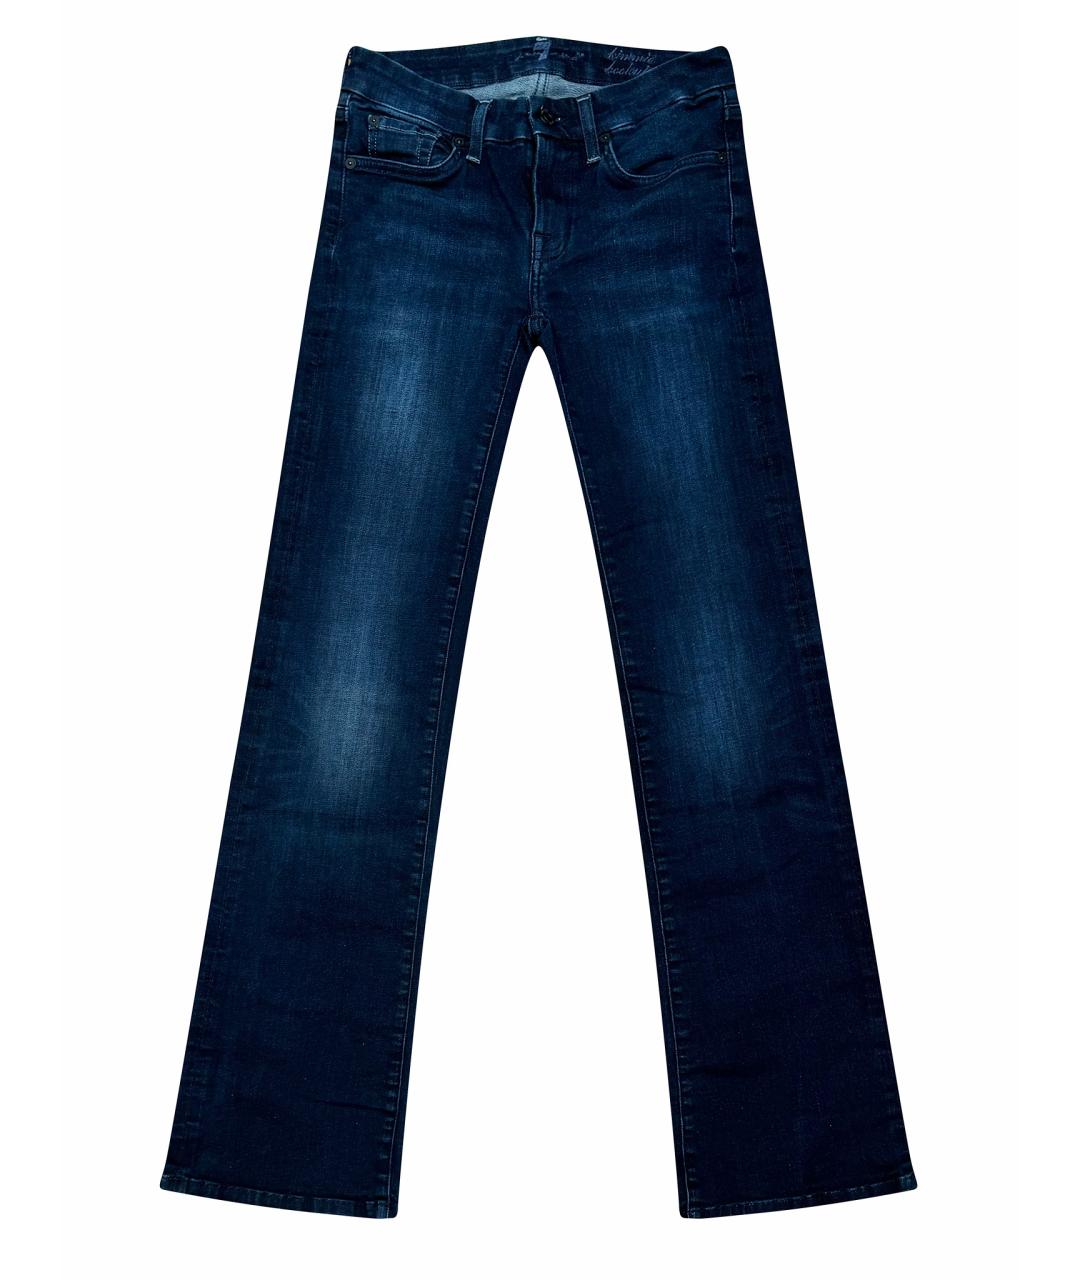 7 FOR ALL MANKIND Темно-синие хлопковые джинсы клеш, фото 1